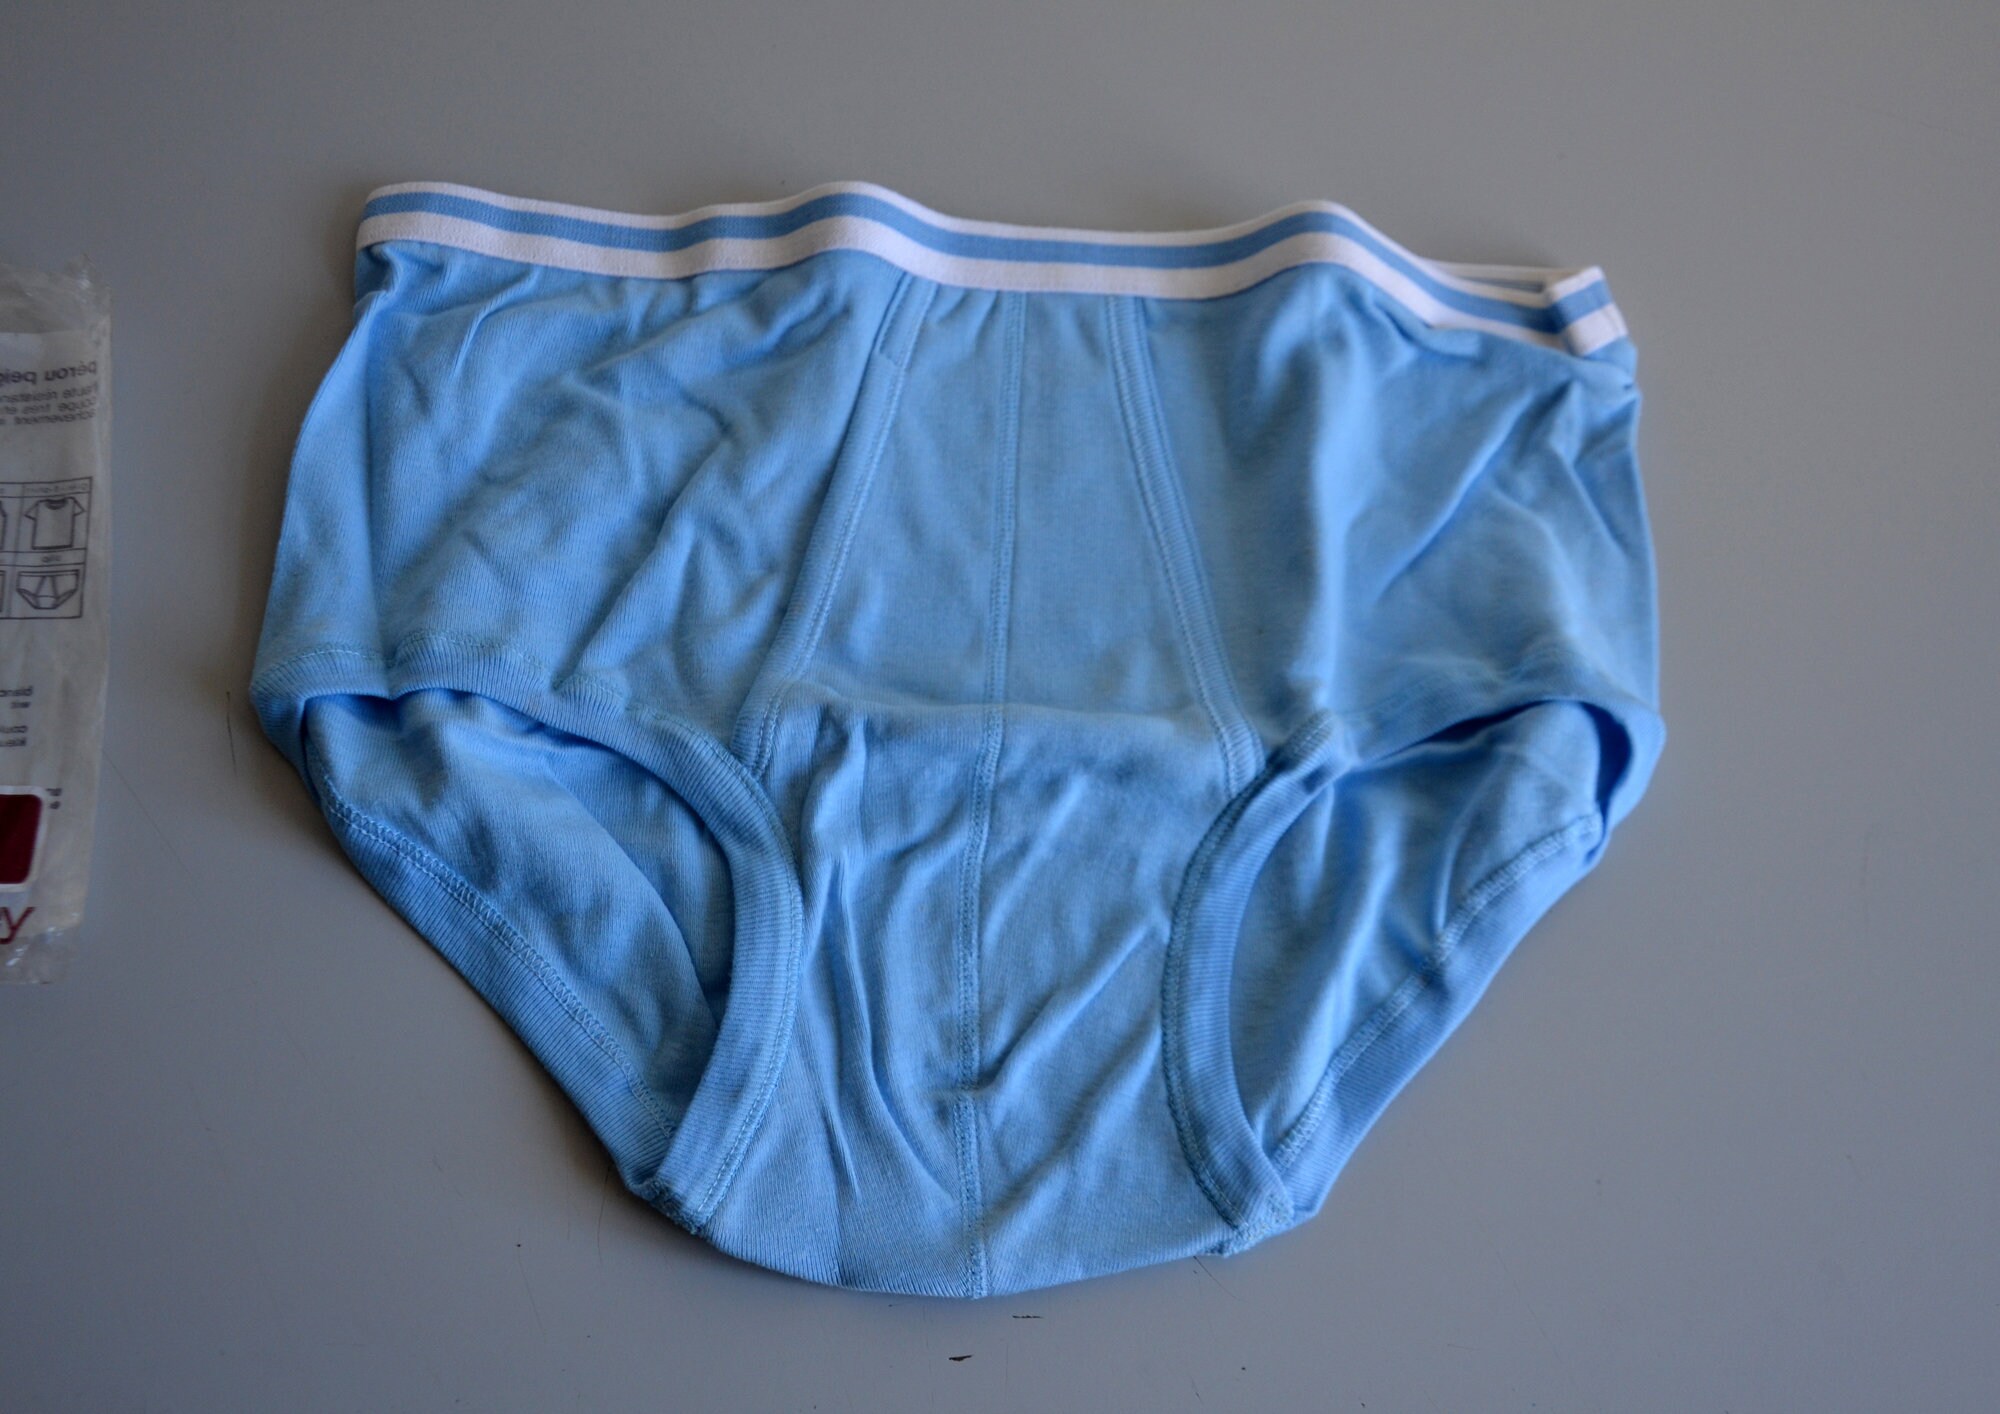 Vintage Jockey Briefs Underwear Classic White Adult Size 36 Inch Unworn New  Old Stock 